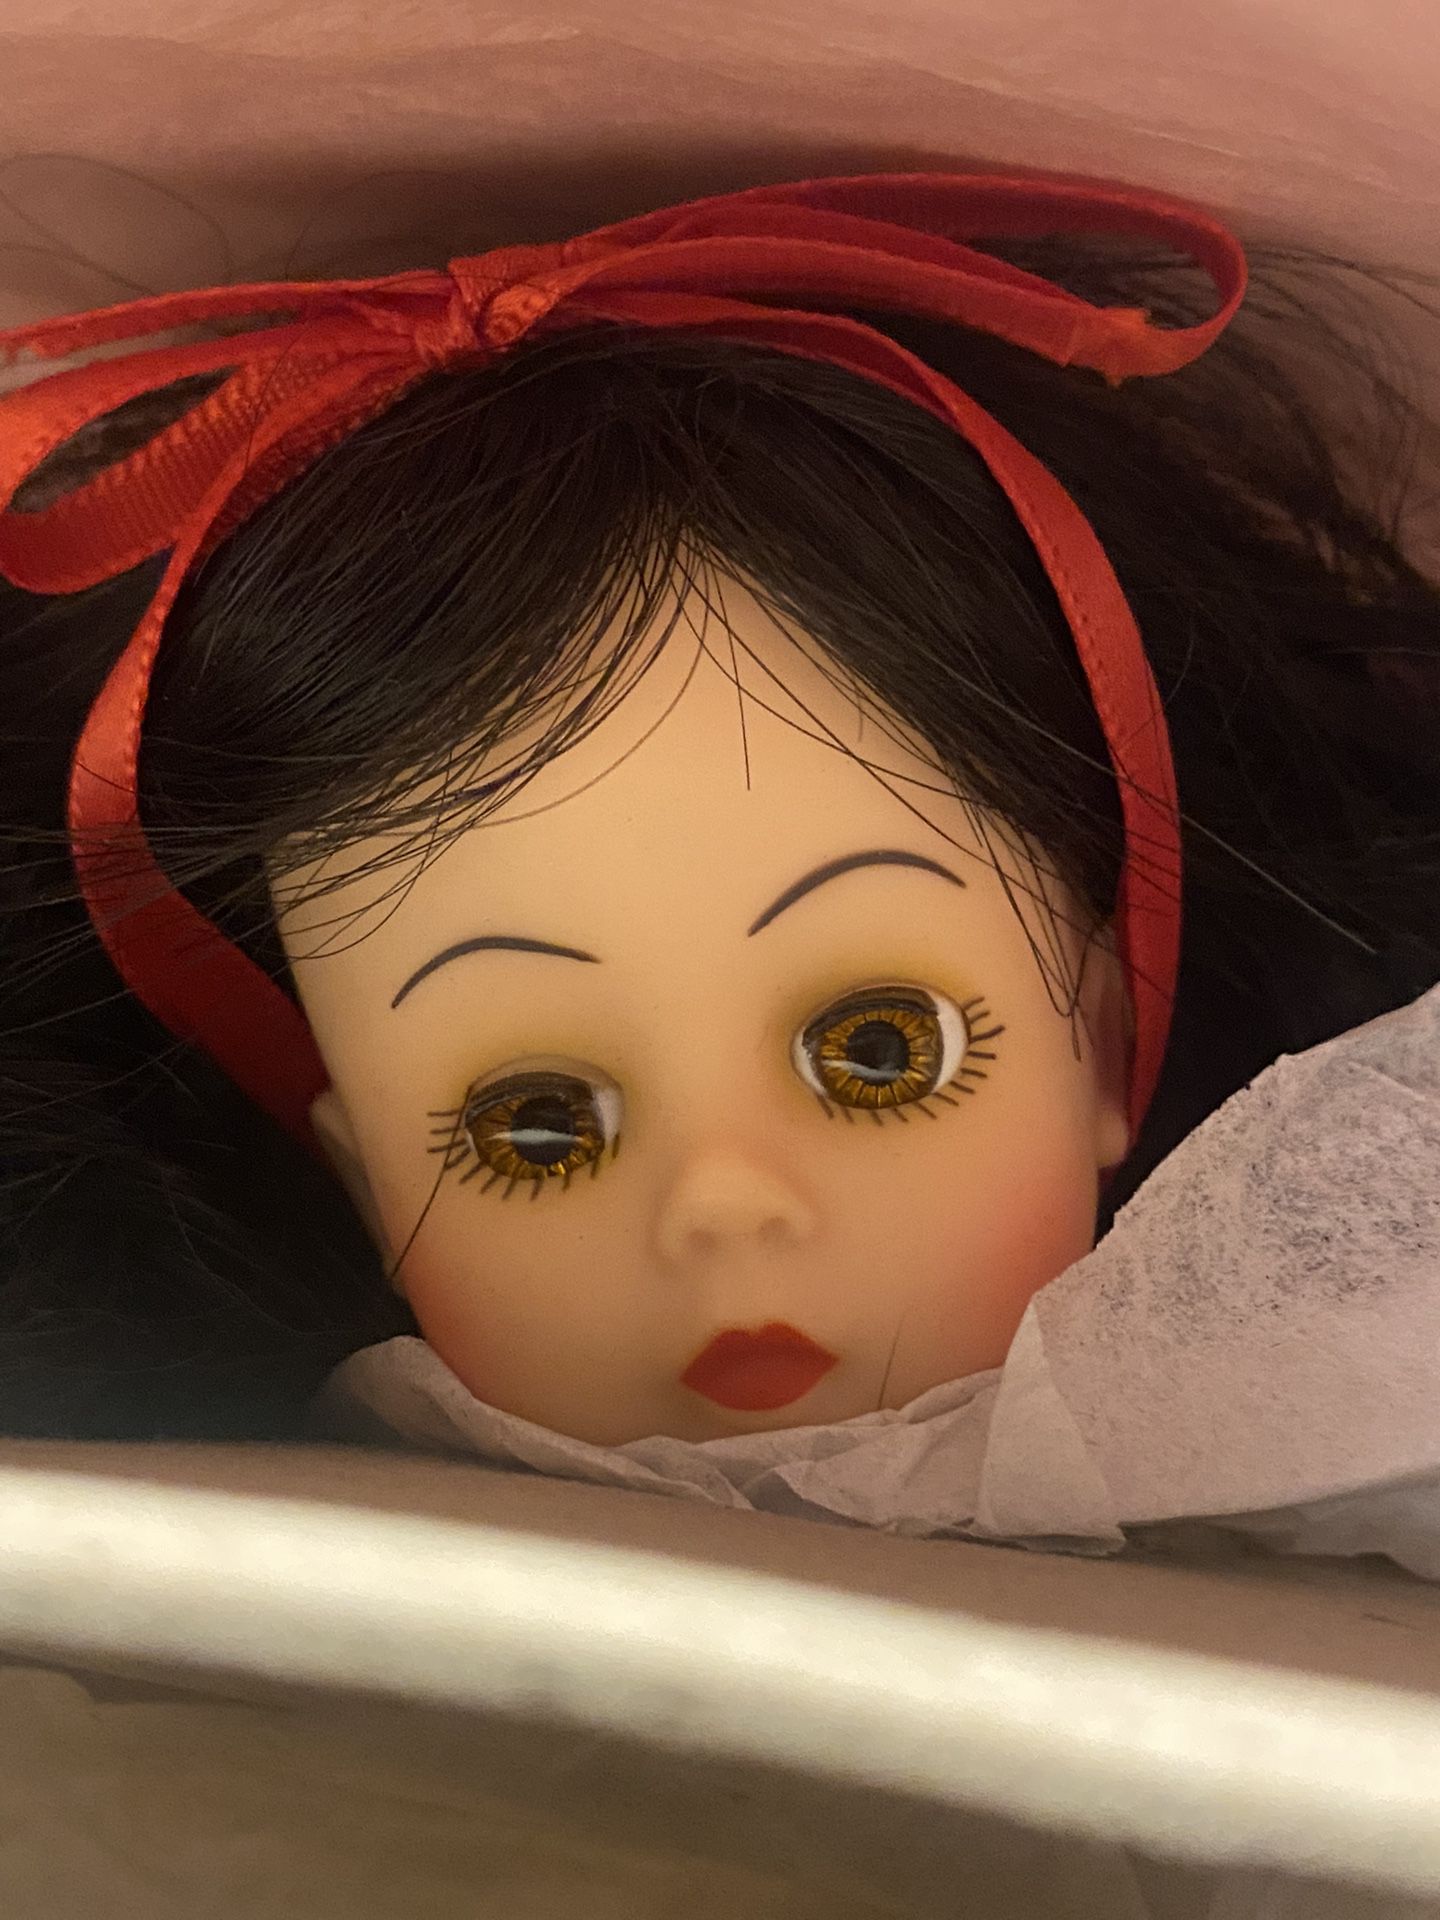 A Collectible  Vintage Snow White Doll  “Madame Alexander “